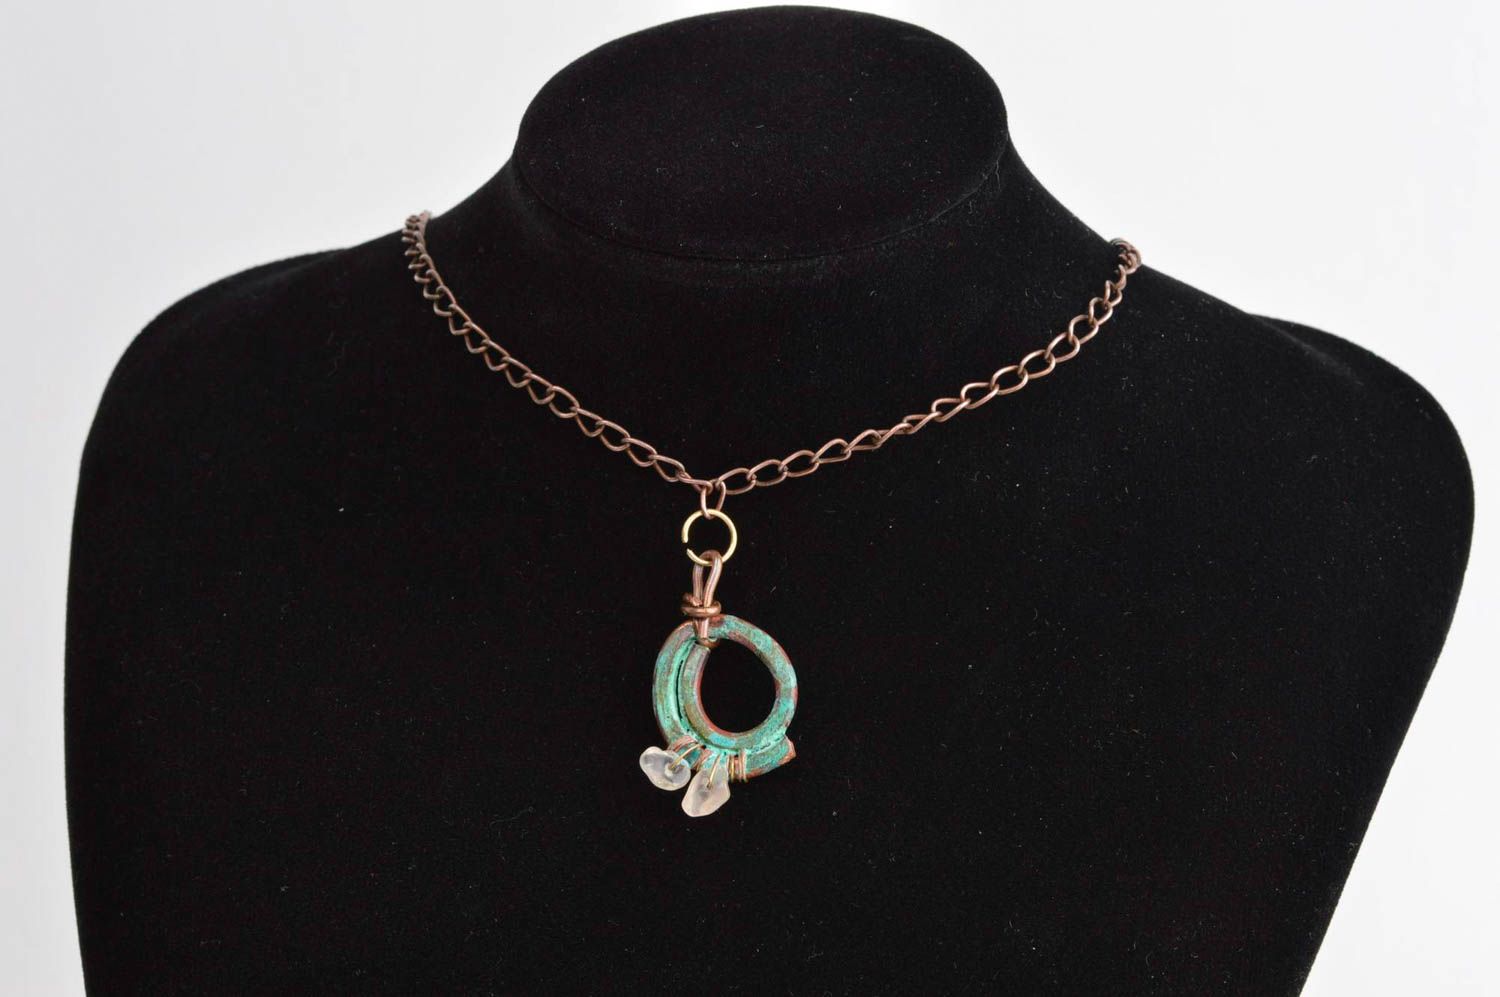 Handmade pendant designer accessory unusual pendant for women gift ideas photo 1